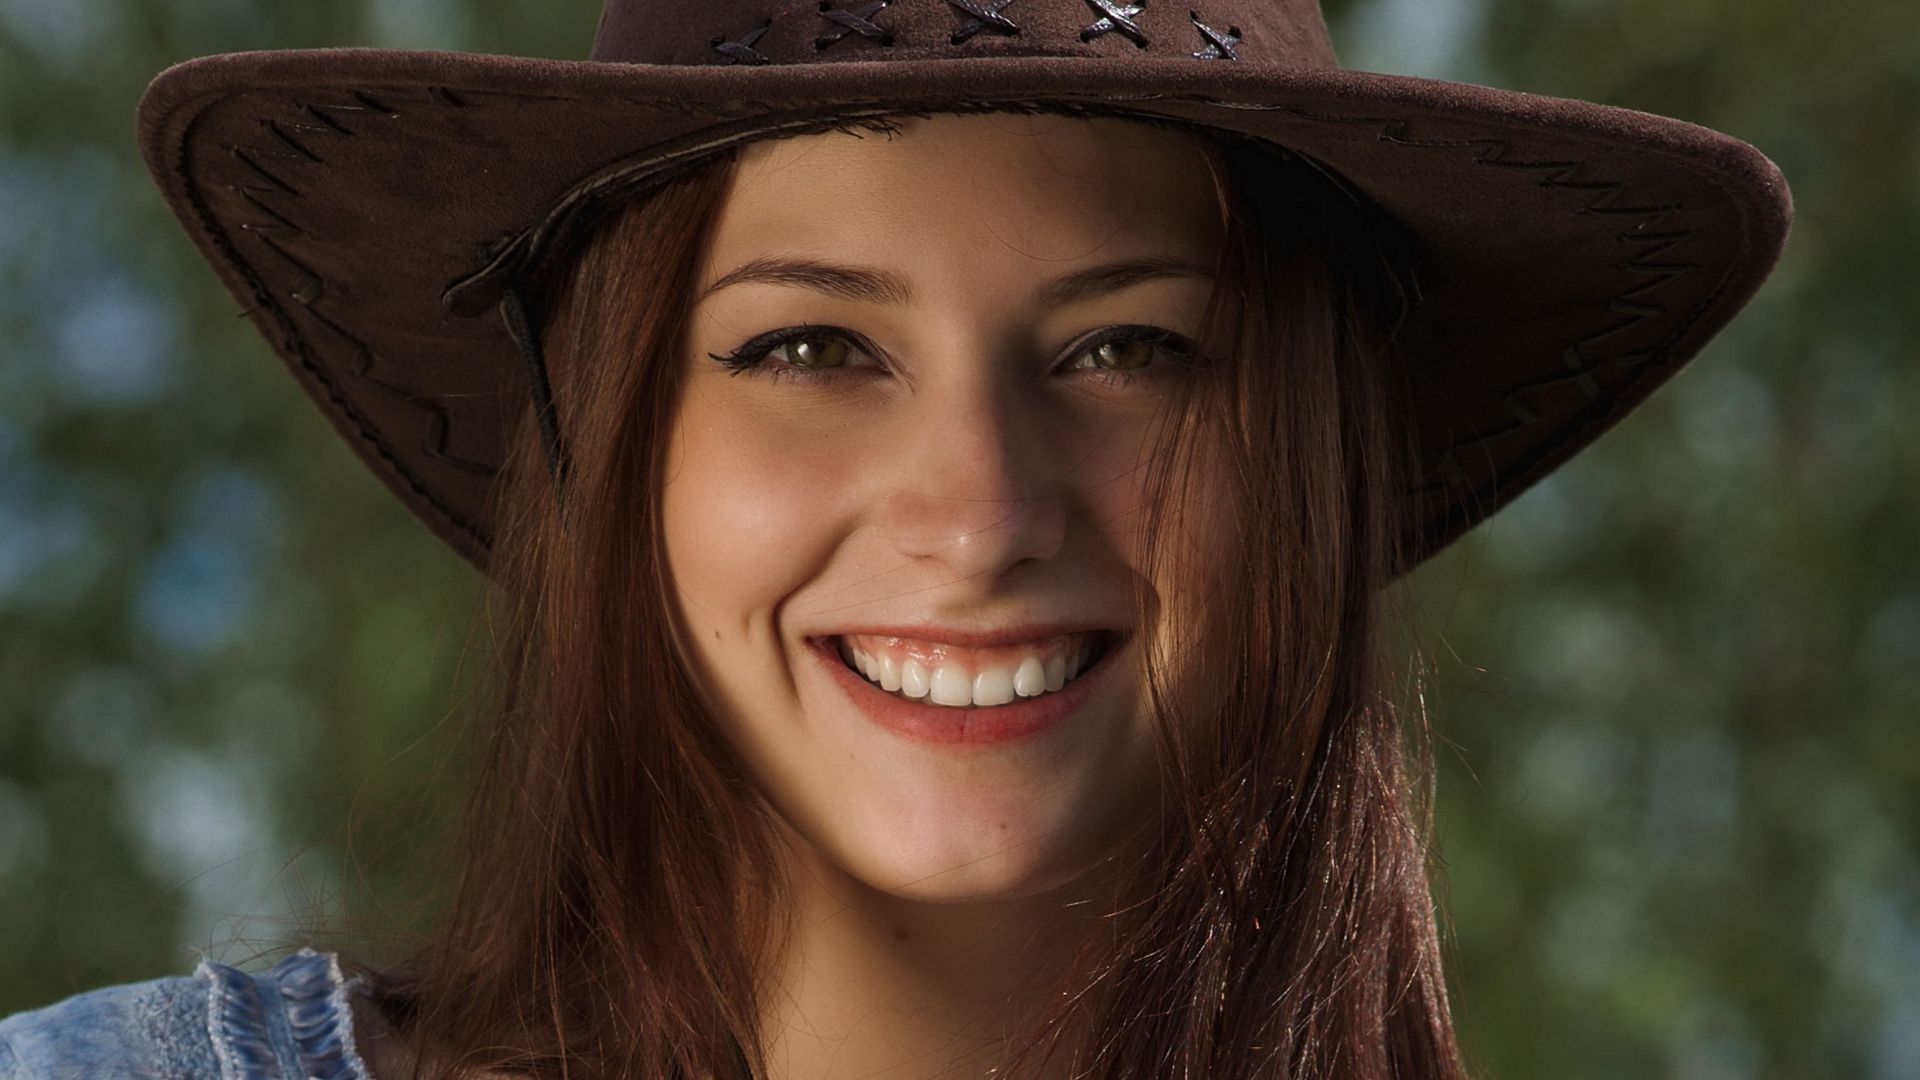 Wallpaper Isabella, smile, face, hat